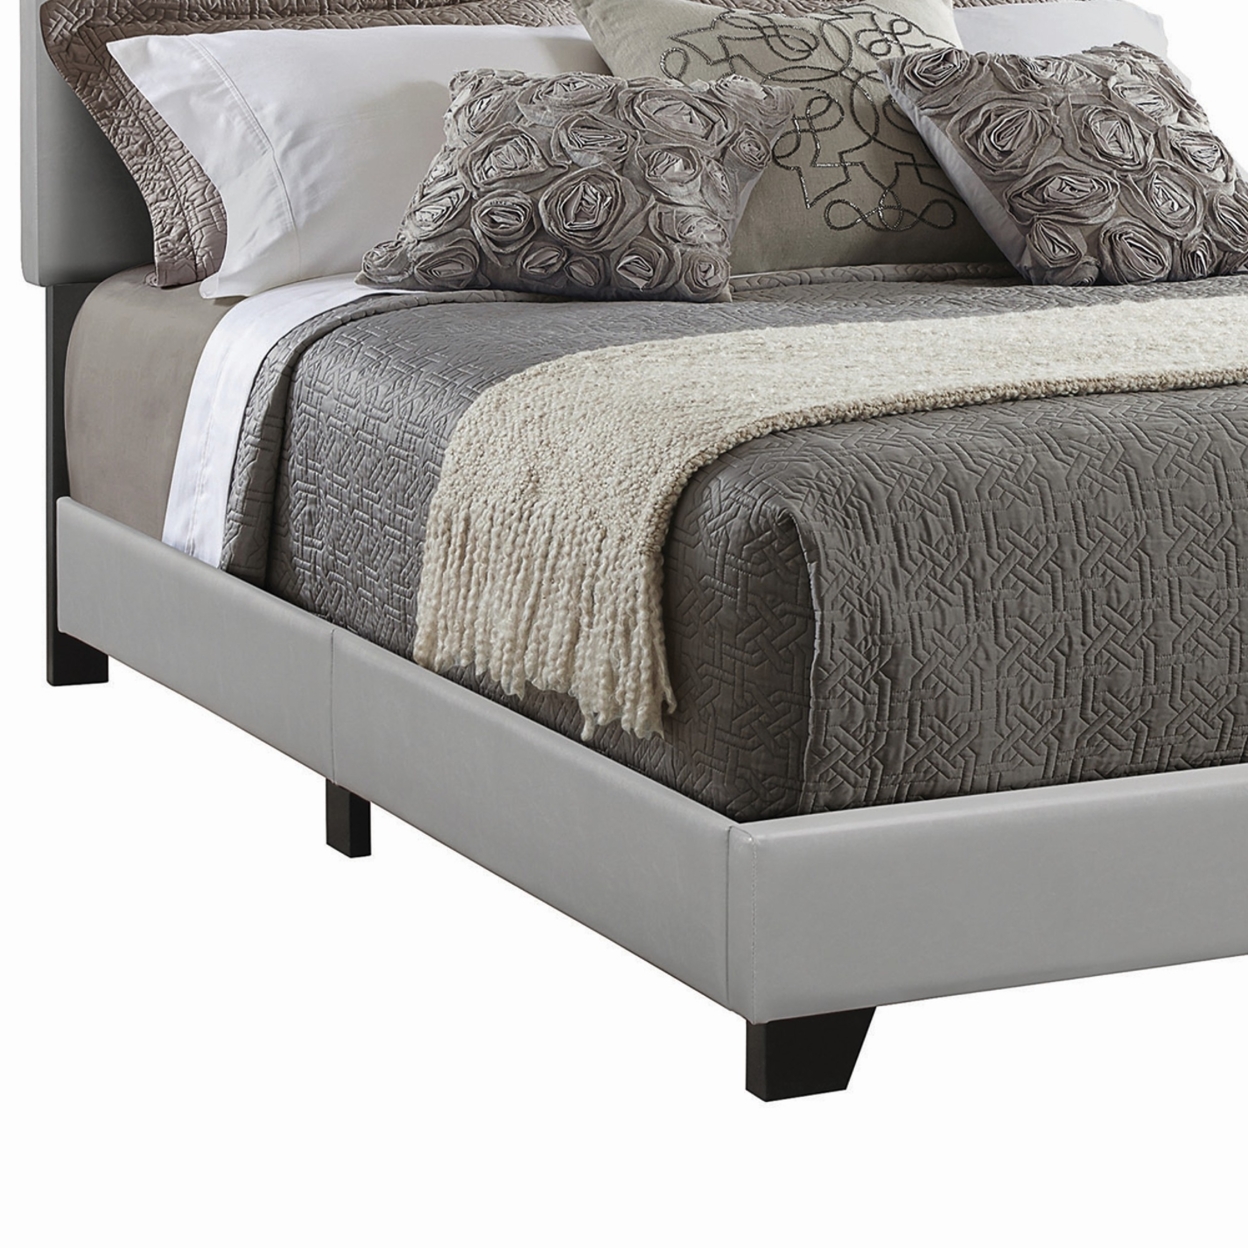 Leather Upholstered California King Size Platform Bed, Gray- Saltoro Sherpi